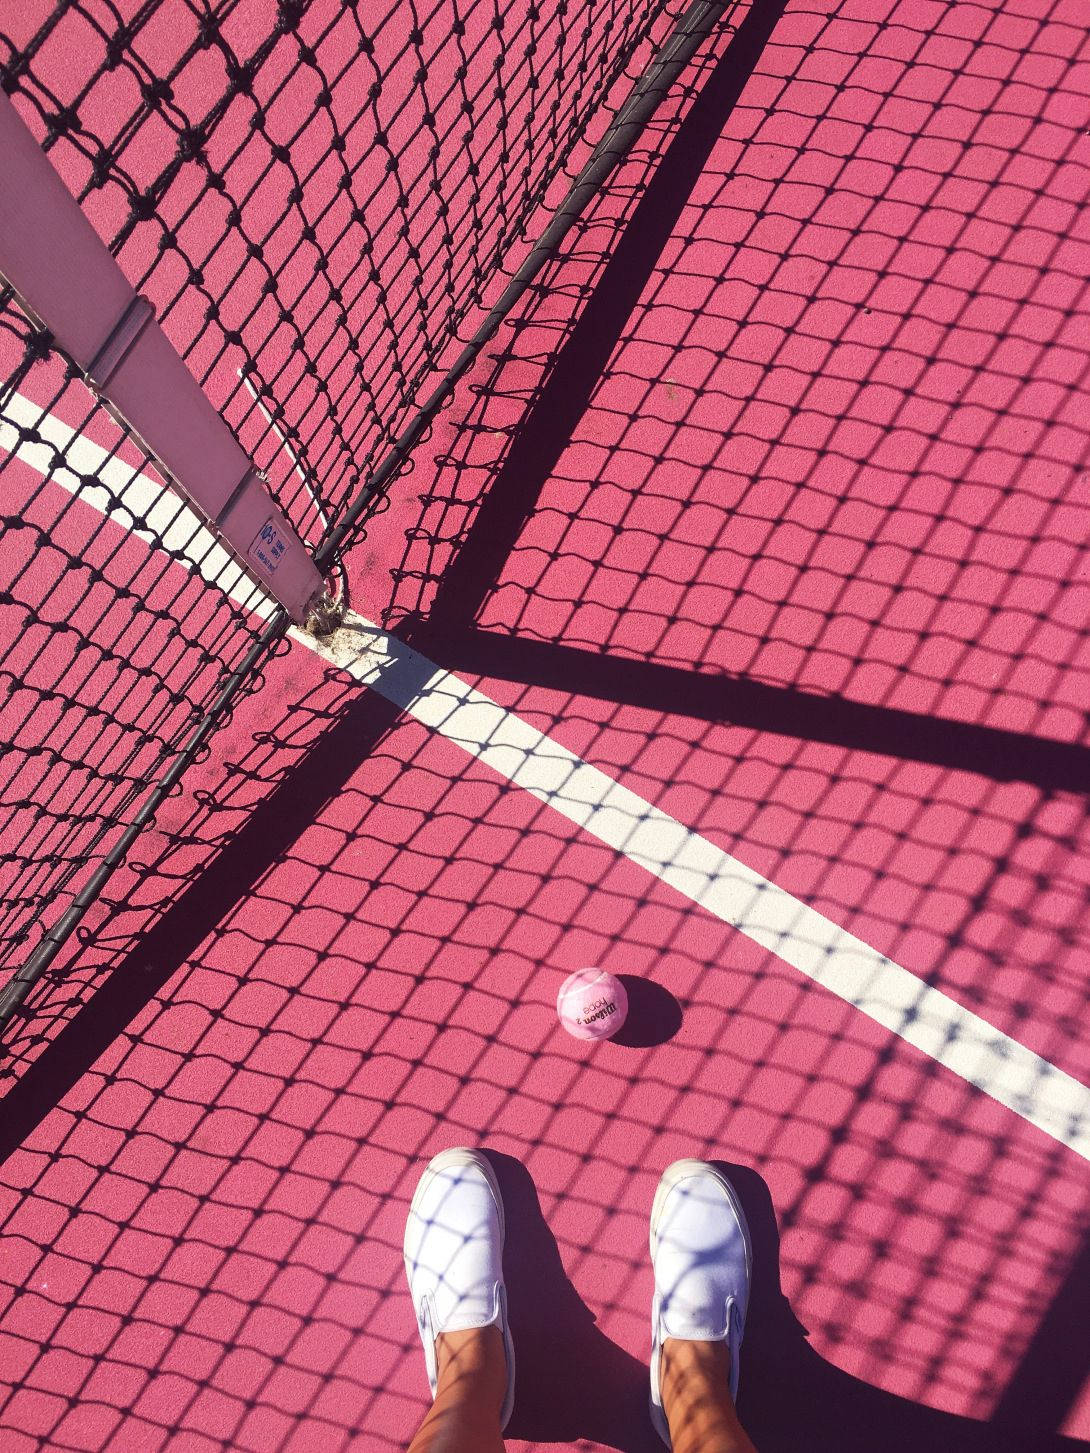  Tennis Hintergrundbild 1090x1453. Download Tennis Net Shadow On Pink Court Phone Wallpaper